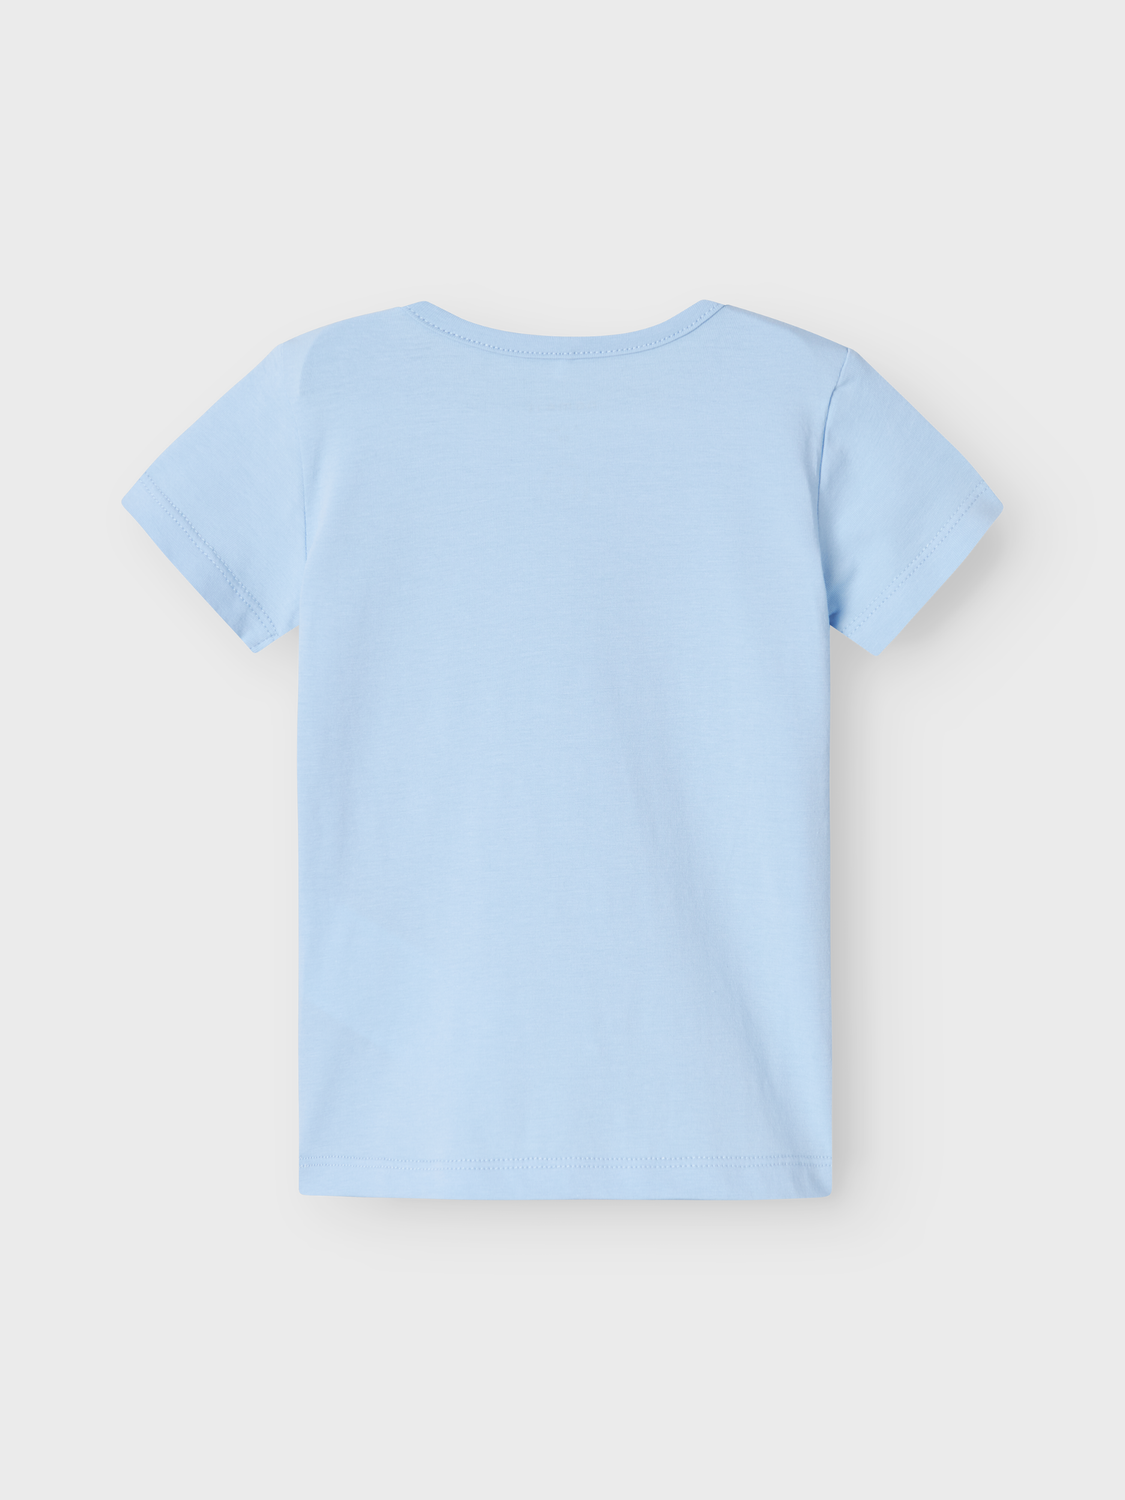 NBMHANNON T-Shirts & Tops - Chambray Blue